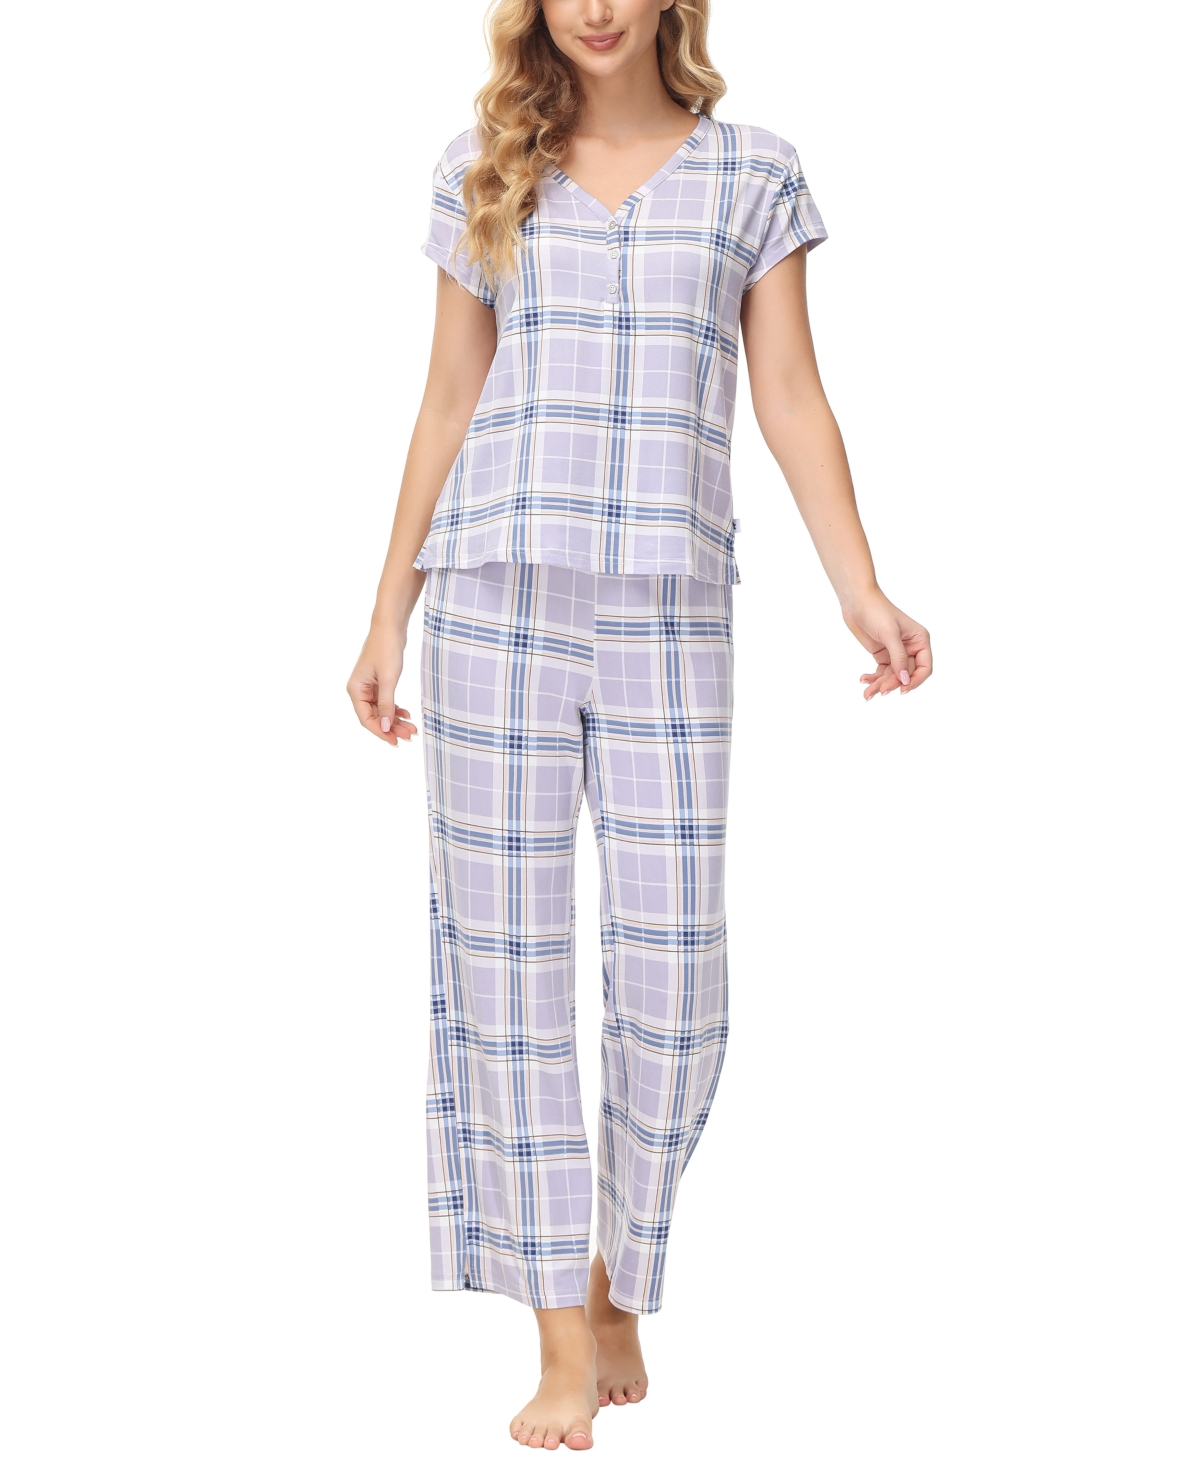 Women's 2 Piece Printed Short Sleeve Henley Top with Wide Pants Pajama Set - Plaid Purple